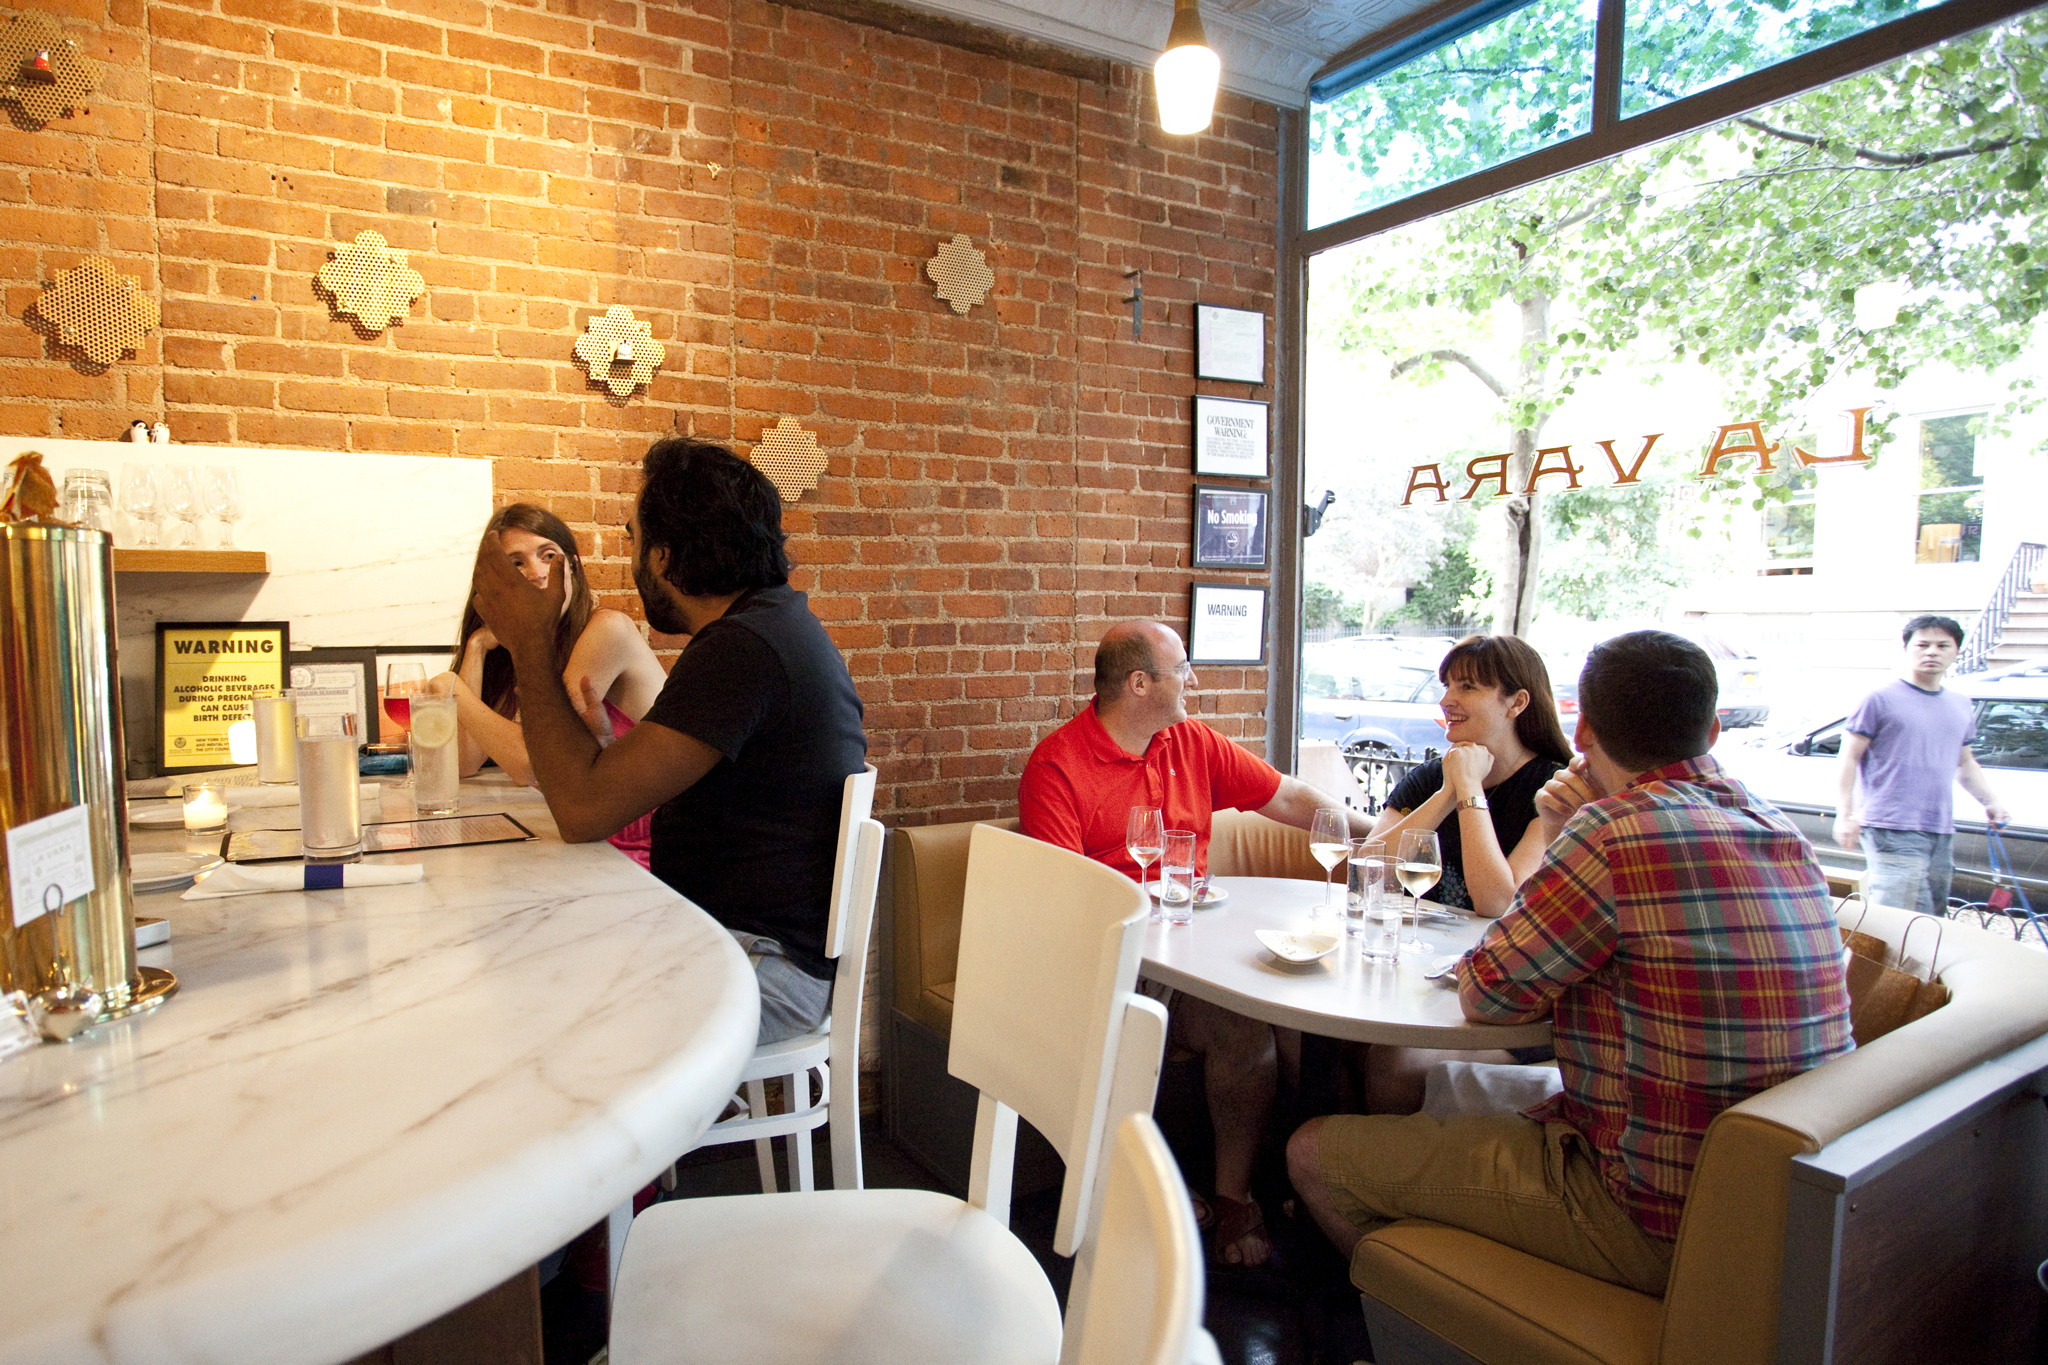 La Vara in Cobble Hill, Brooklyn — Restaurant Review - The New